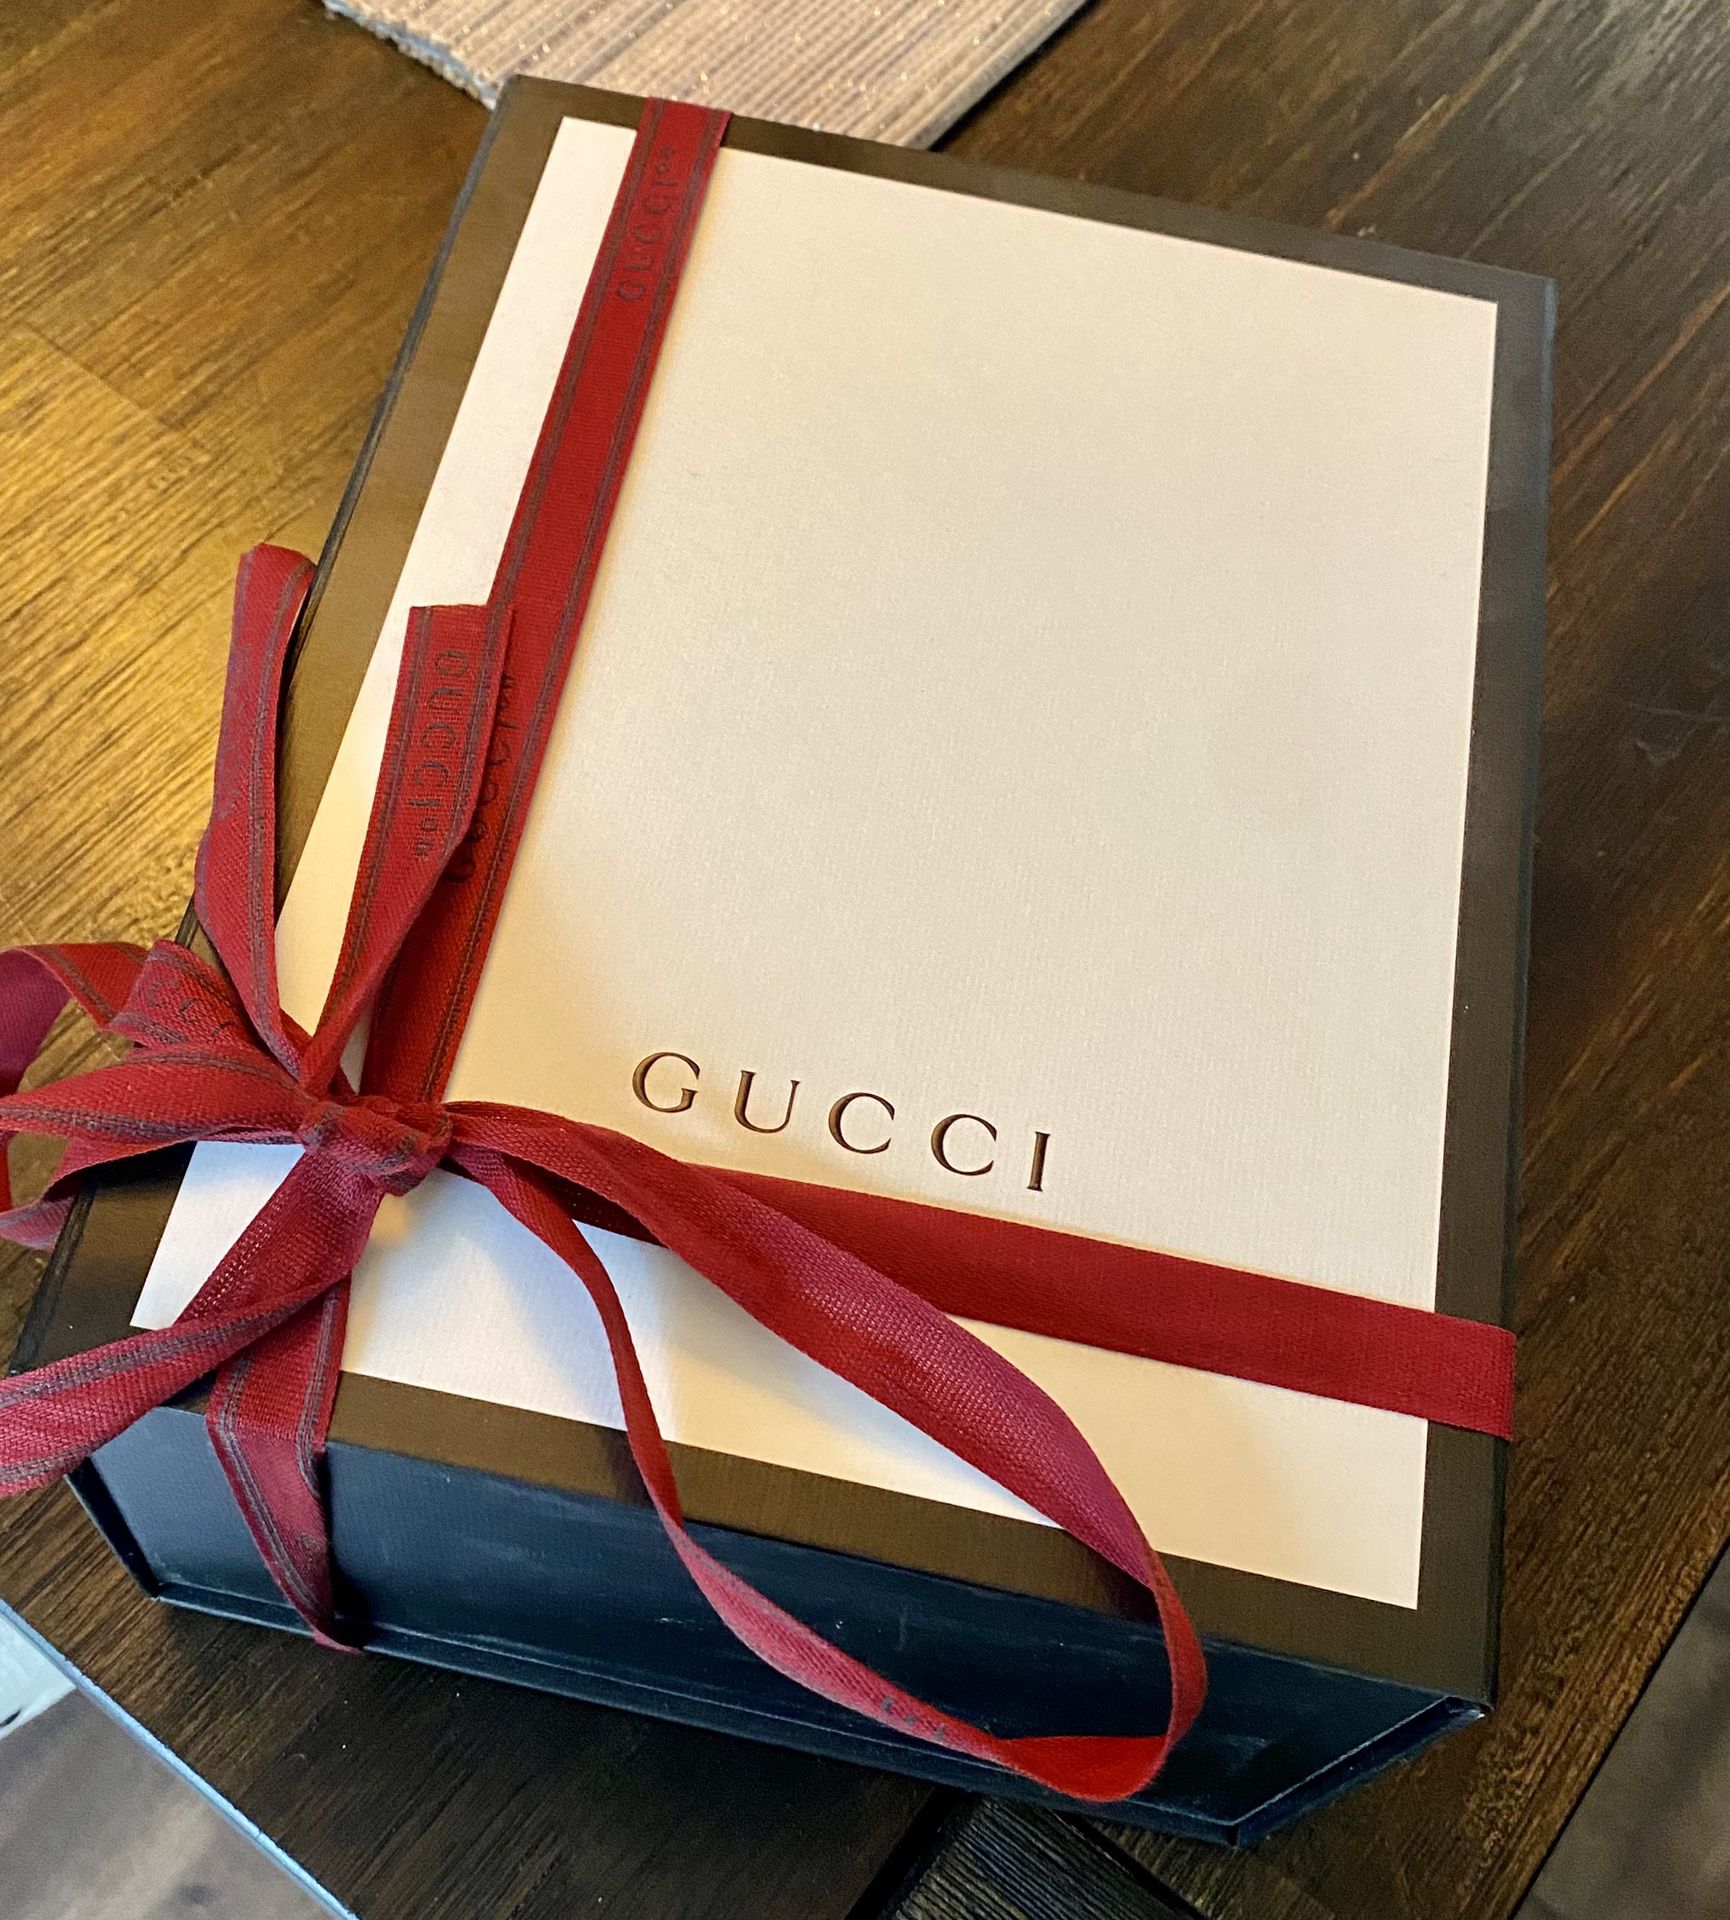 New Gucci GG Supreme Belt Bag 